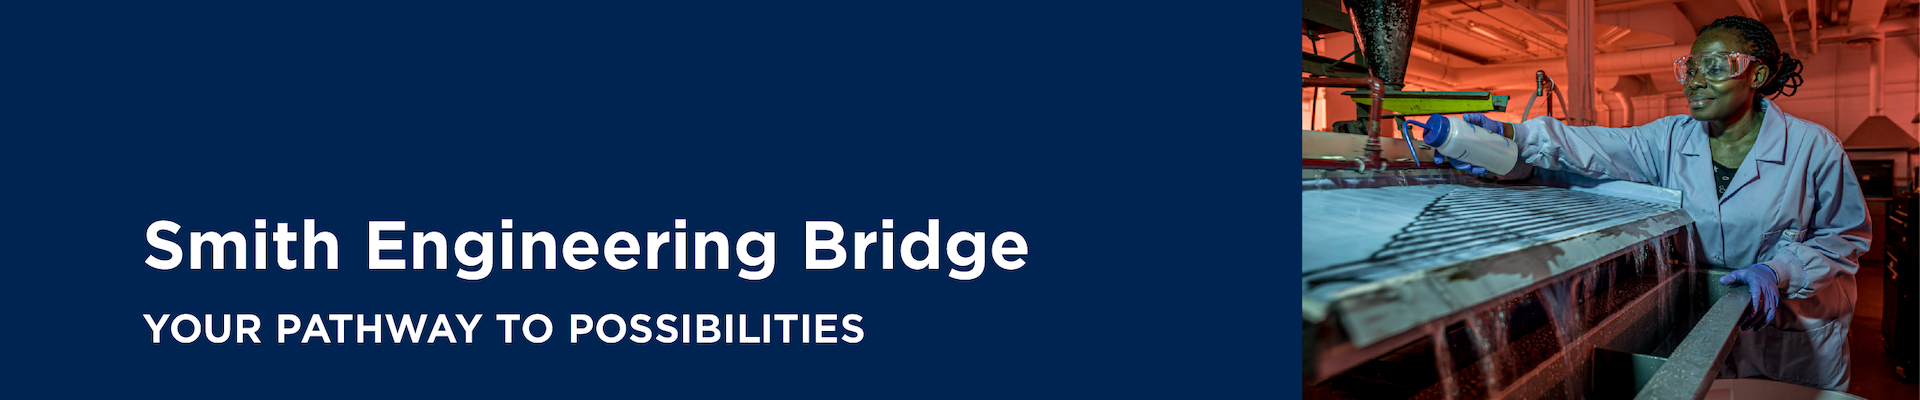 Smith Engineering Bridge Banner